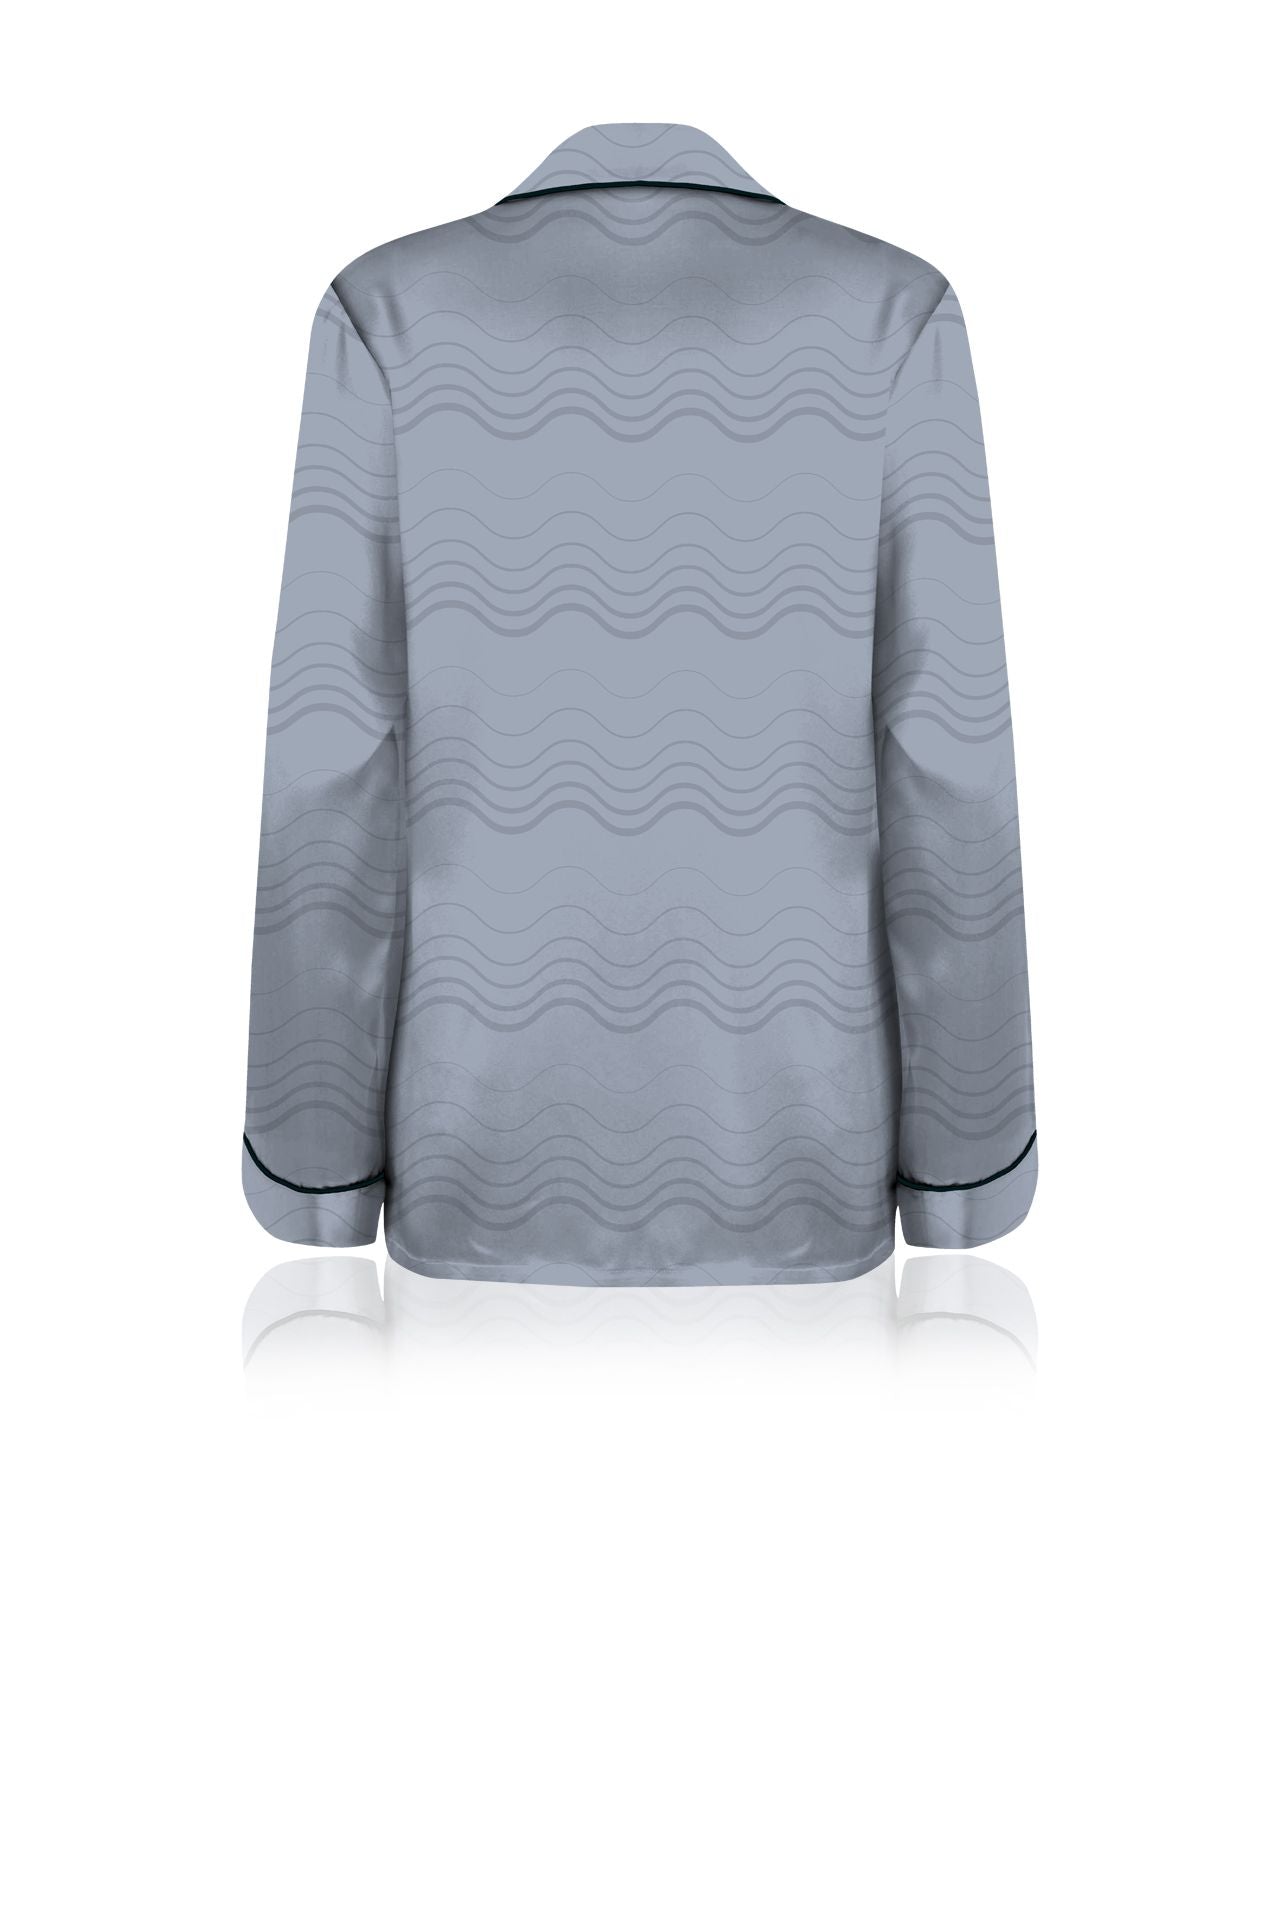 Grey Vegan Silk Full Sleeve Pajama Set Made In Sustainable Cupro